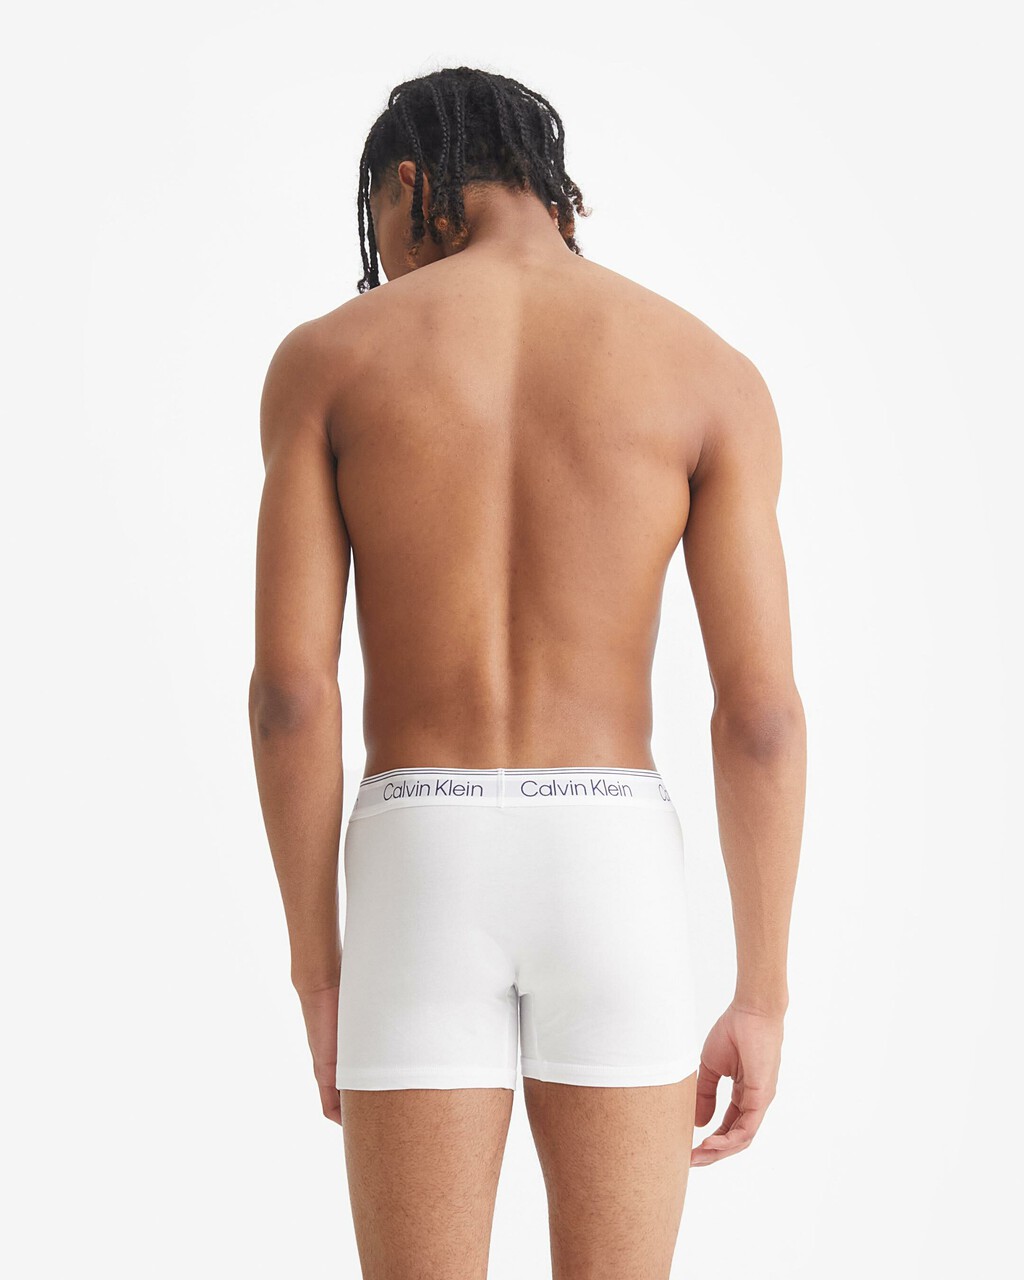 ATHLETIC COTTON 平角內褲 2 件裝, ATHLETIC GREY HEATHER/WHITE, hi-res